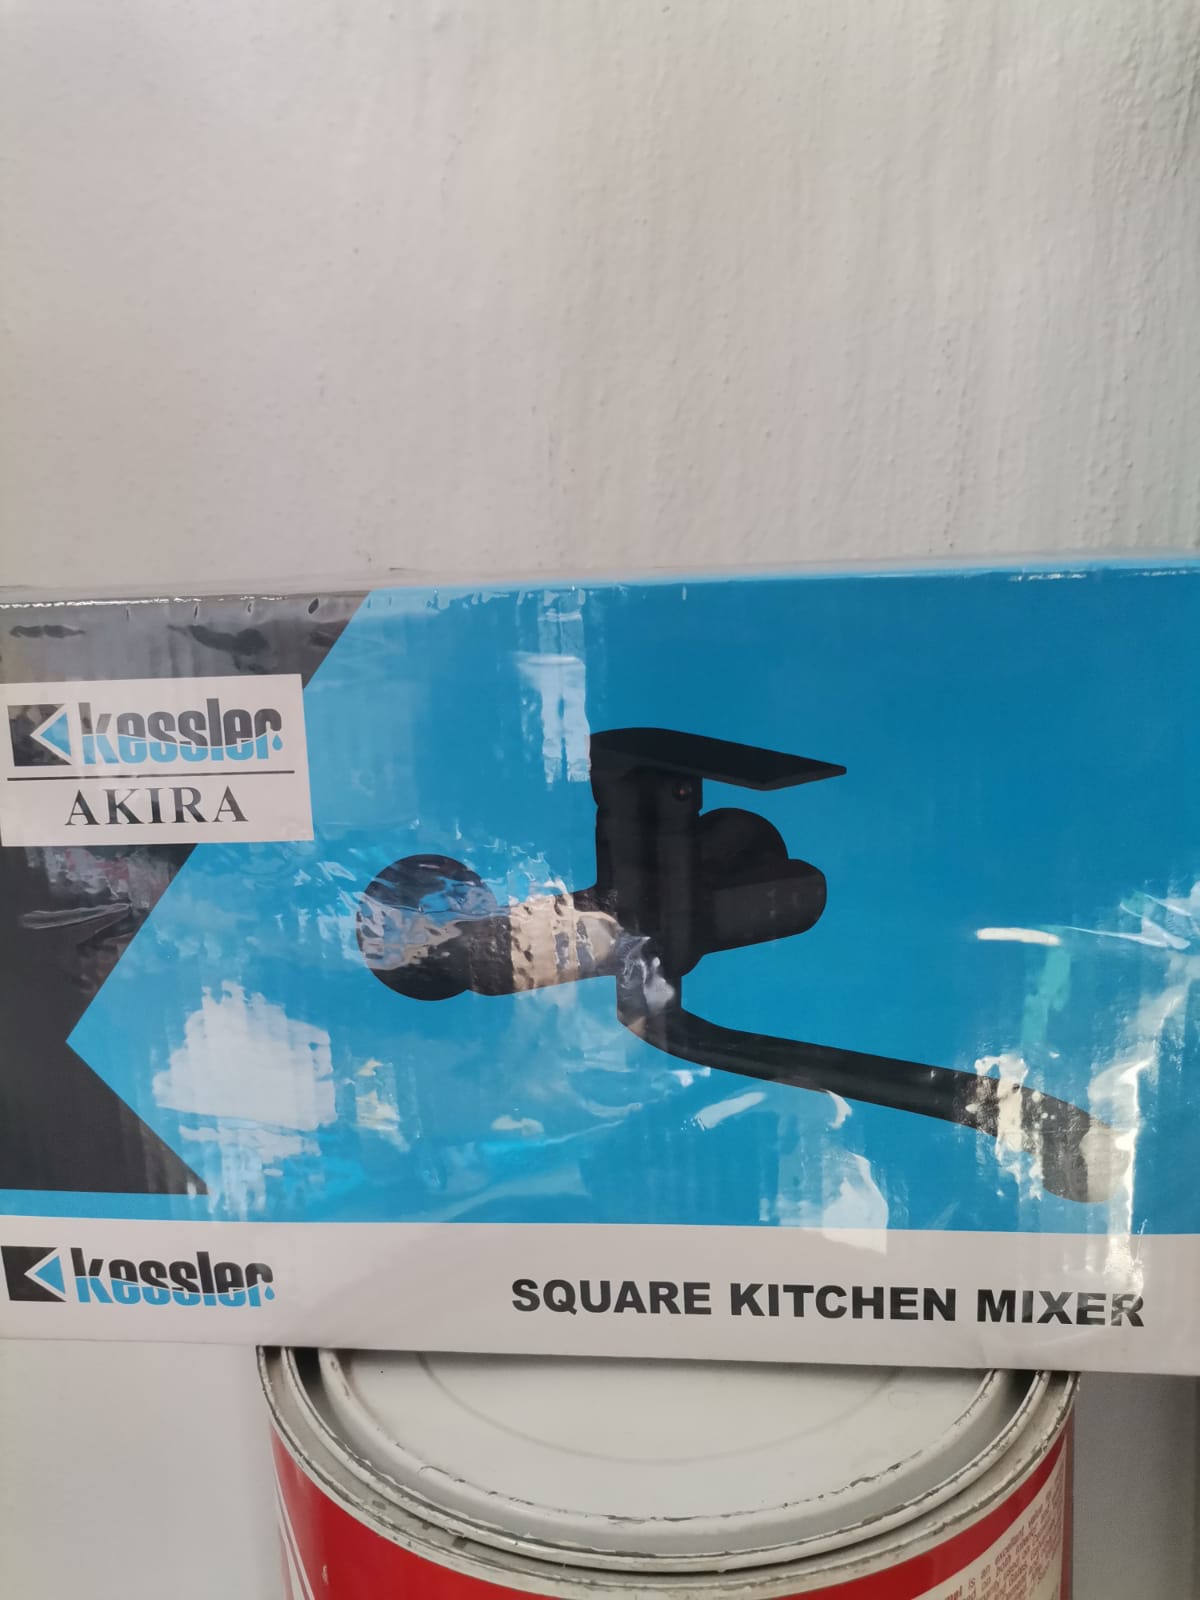 Kessler kitchen mixer